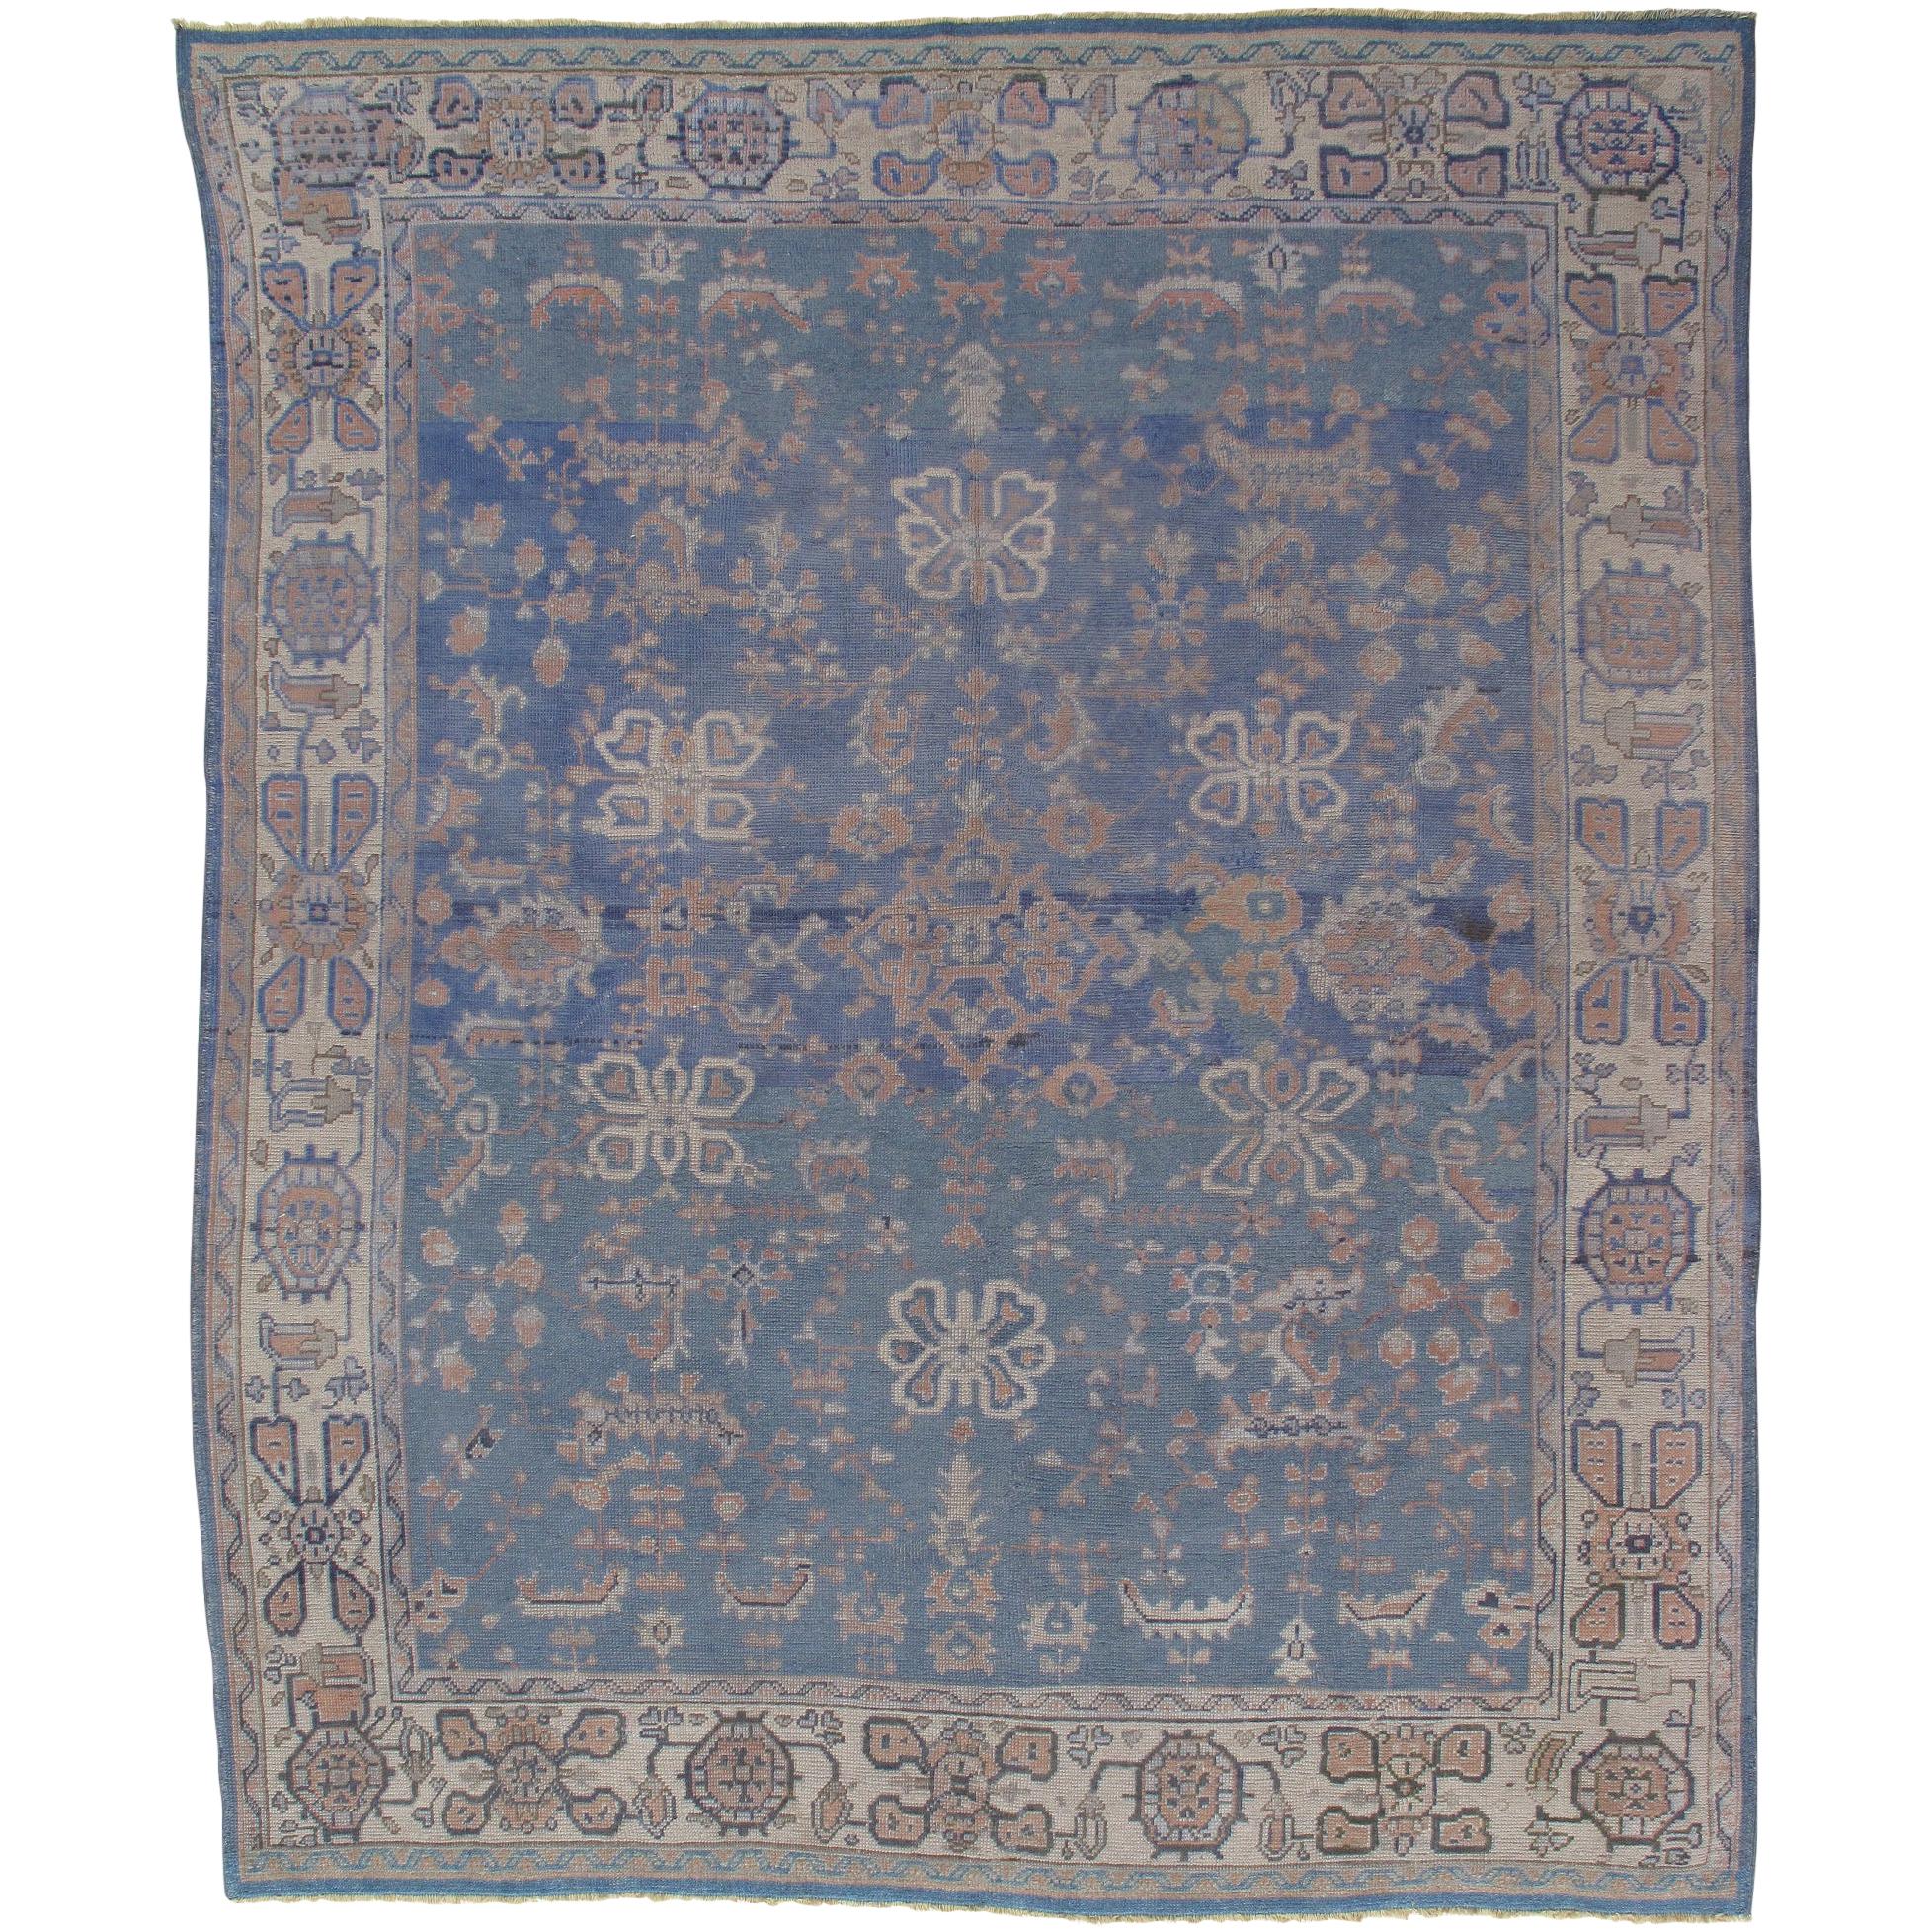 Antique Oushak Carpet, Handmade Turkish Oriental Rug, Beige, Taupe, Soft Blue